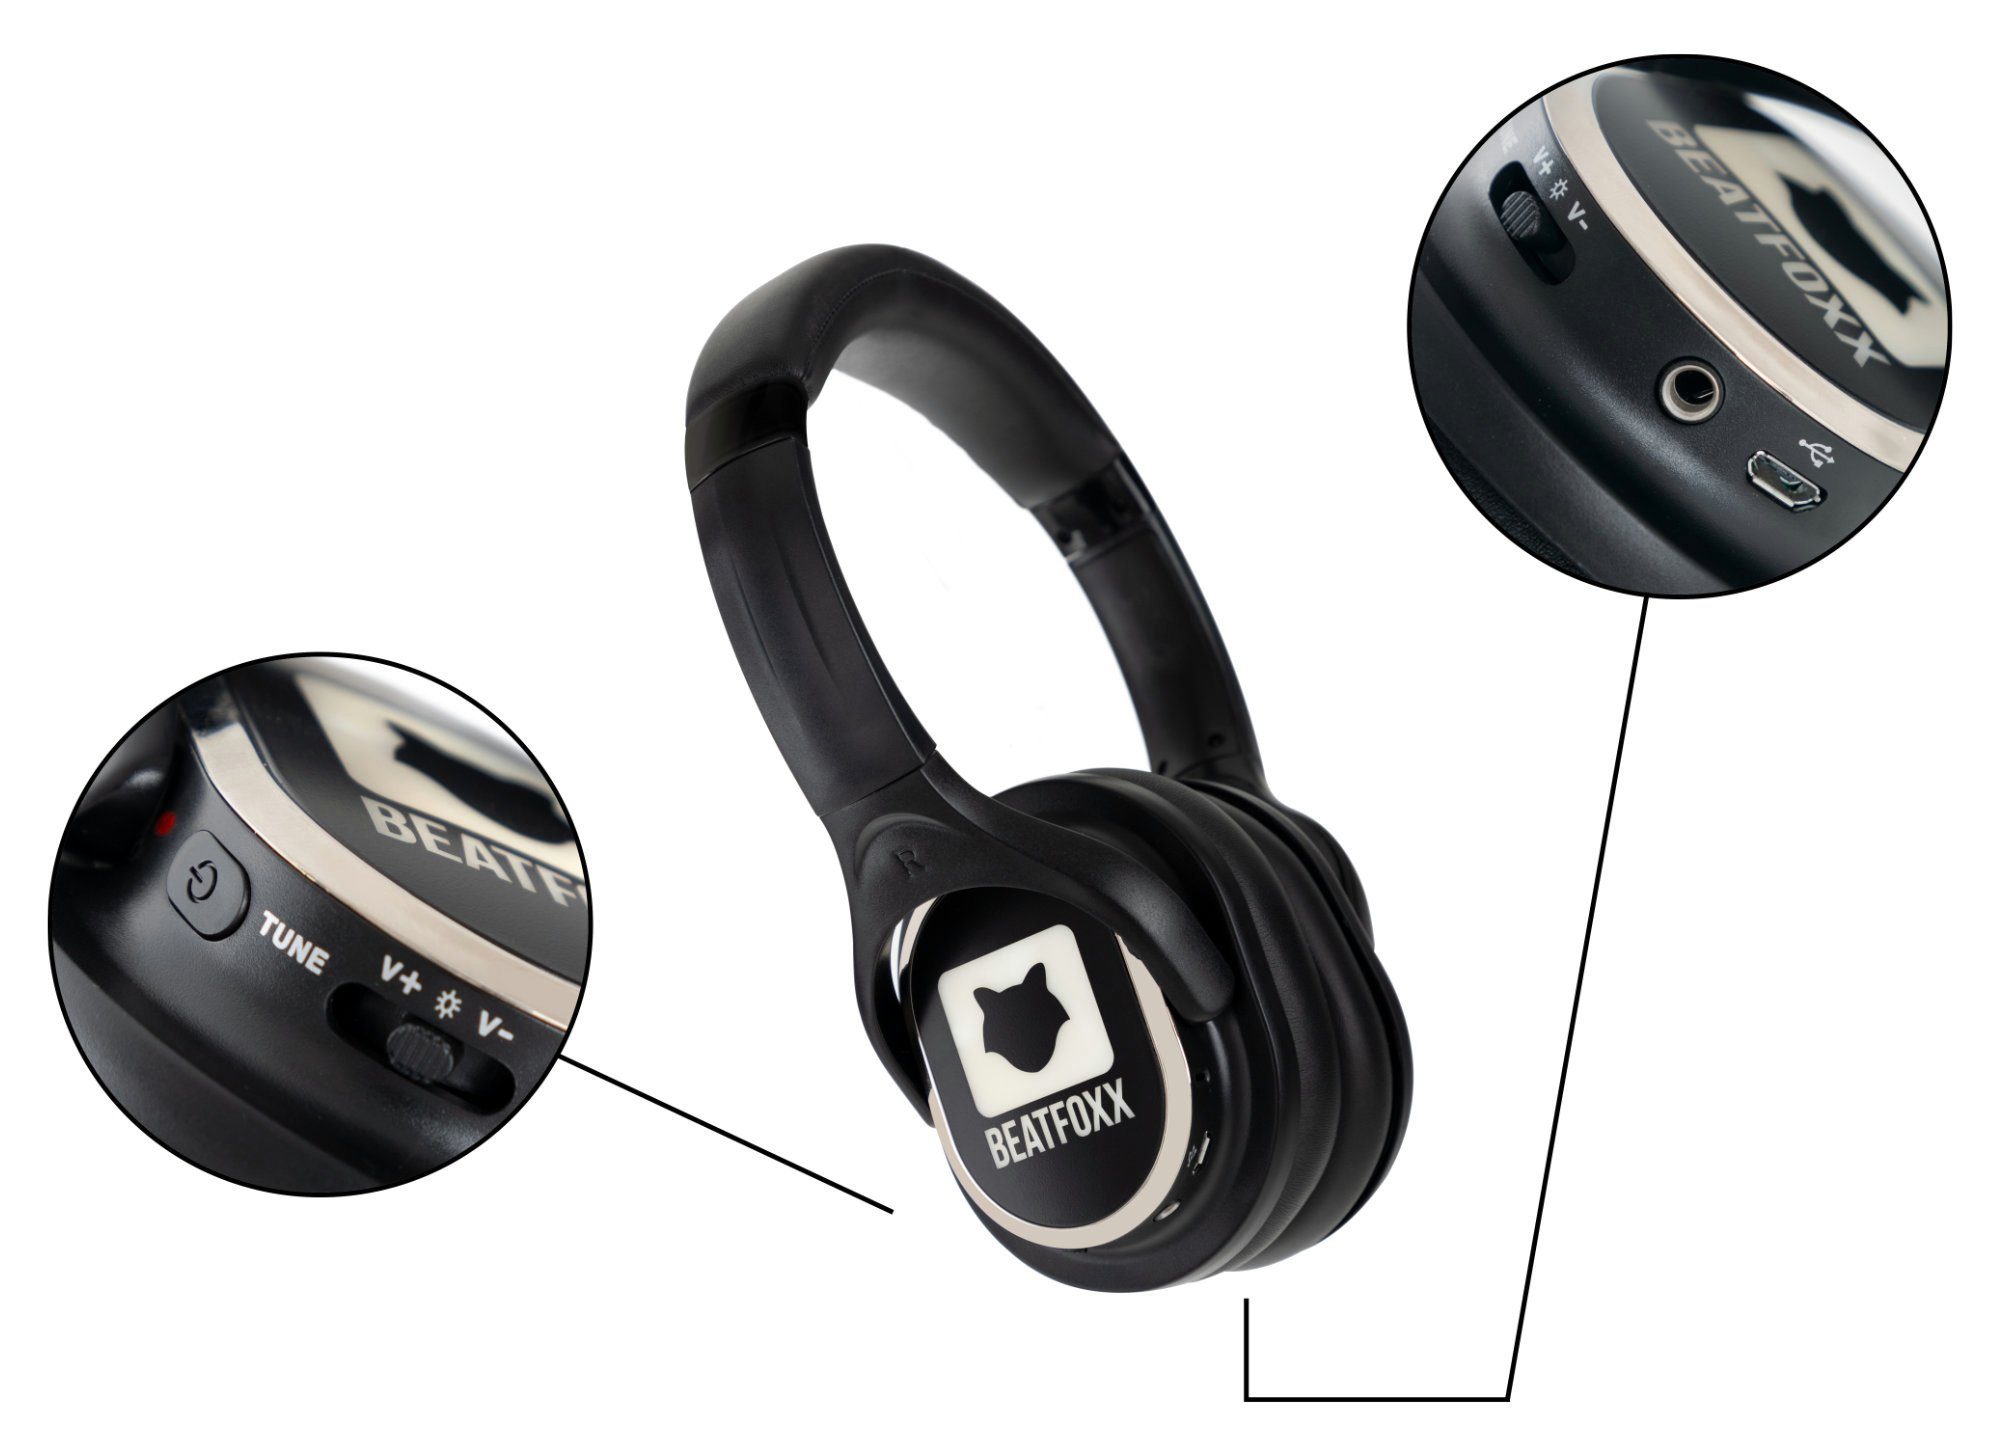 Ladegeräte 2 empfangbare Kopfhörer Disco-Anwendungen, (Wireless Kanäle) Kopfhörern Funk-Kopfhörer & für Set 32 3 Silent Beatfoxx UHF-Technik, Stereo V2 Silent mit Disco SDH-340